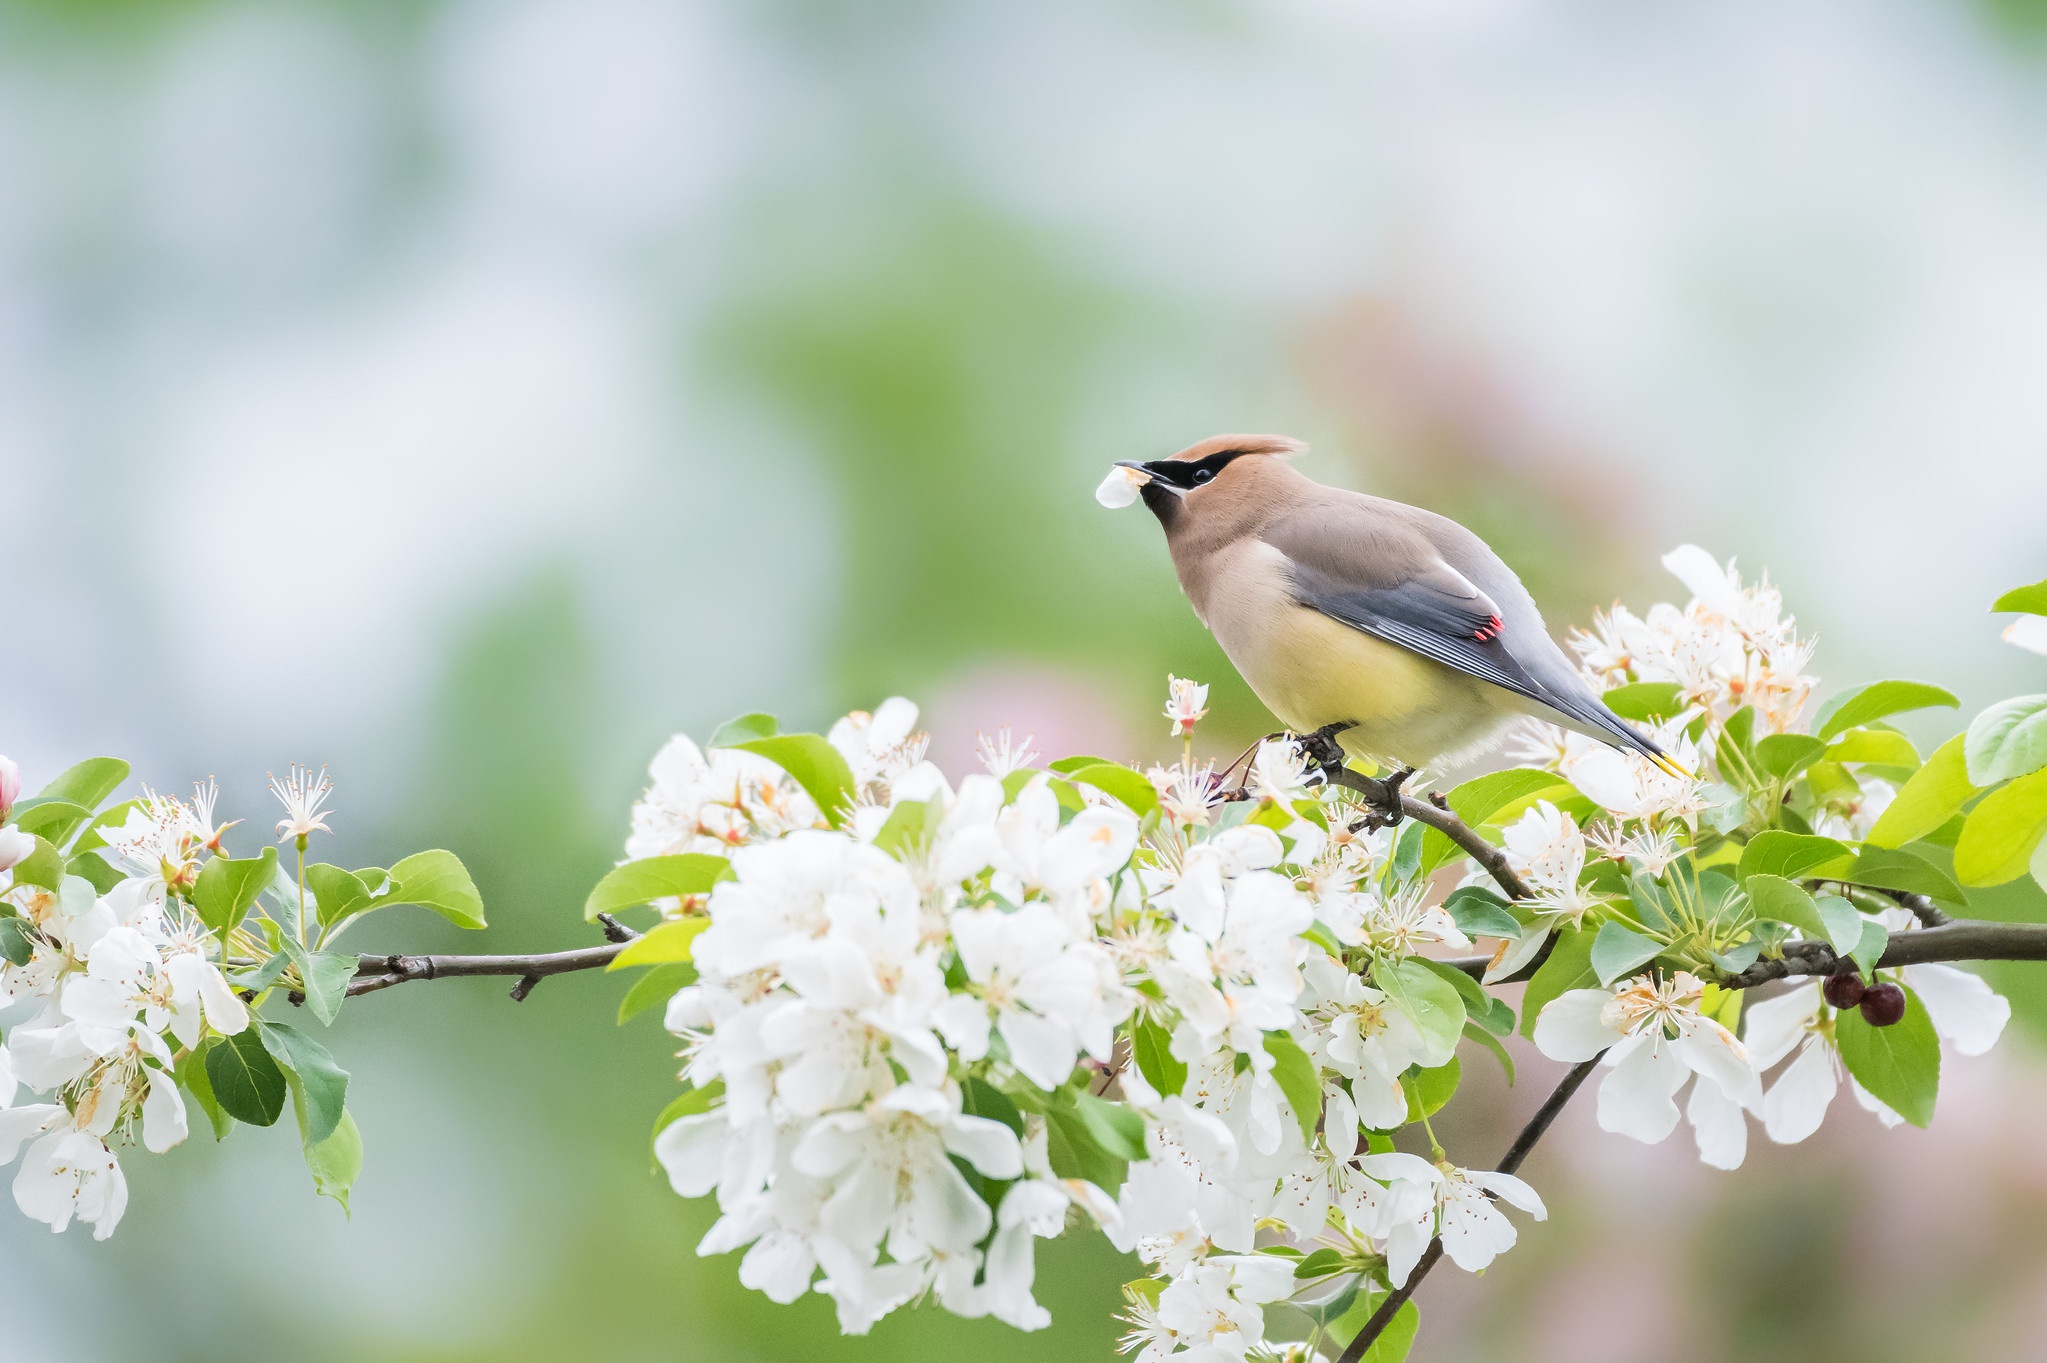 468131 descargar imagen animales, bombycilla, ave, florecer, flor blanca, aves: fondos de pantalla y protectores de pantalla gratis